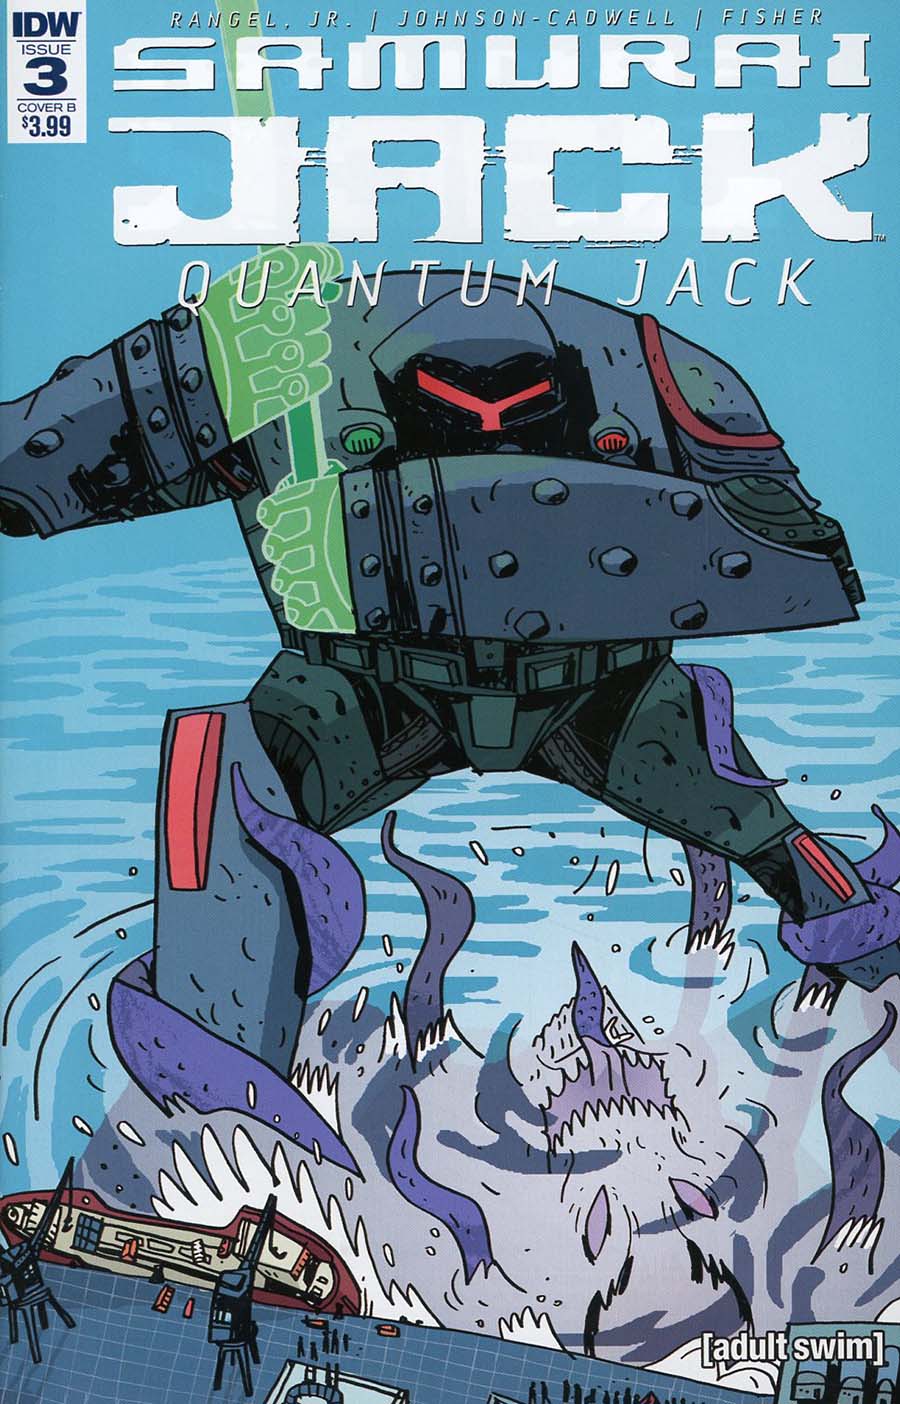 Samurai Jack Quantum Jack #3 Cover B Variant Warwick Johnson-Cadwell Cover